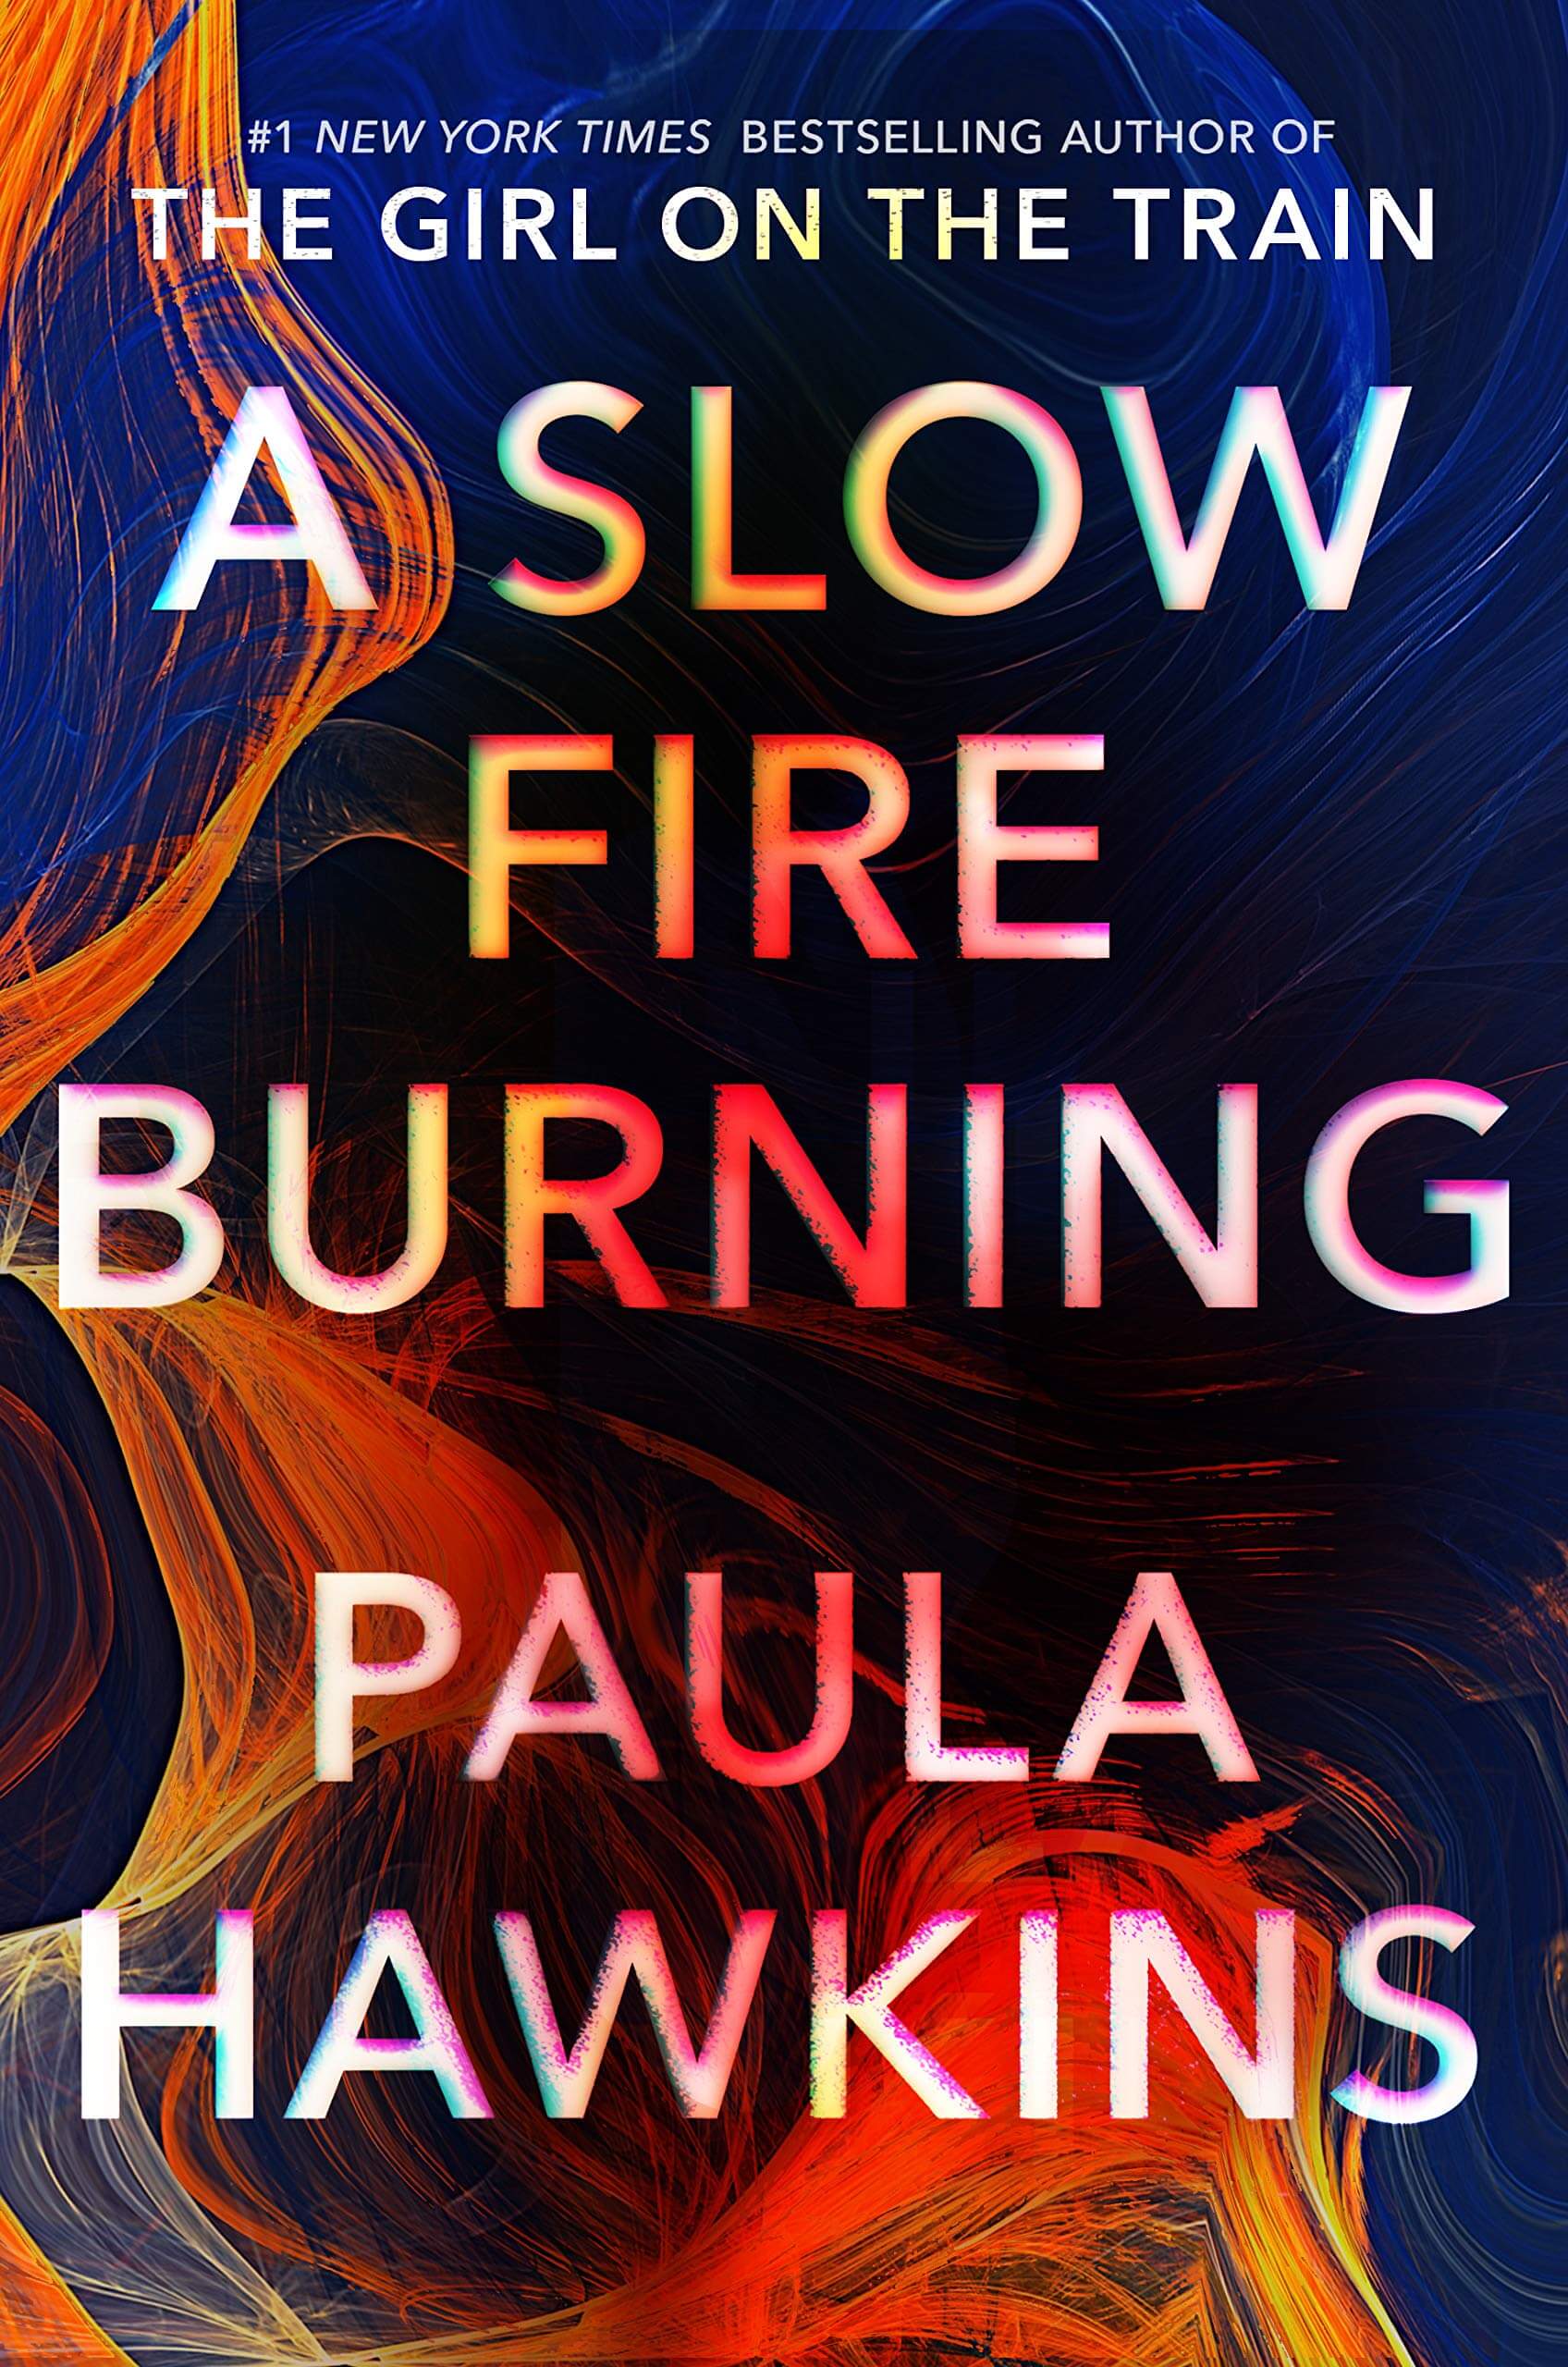 ASlowFireBurning PaulaHawkins